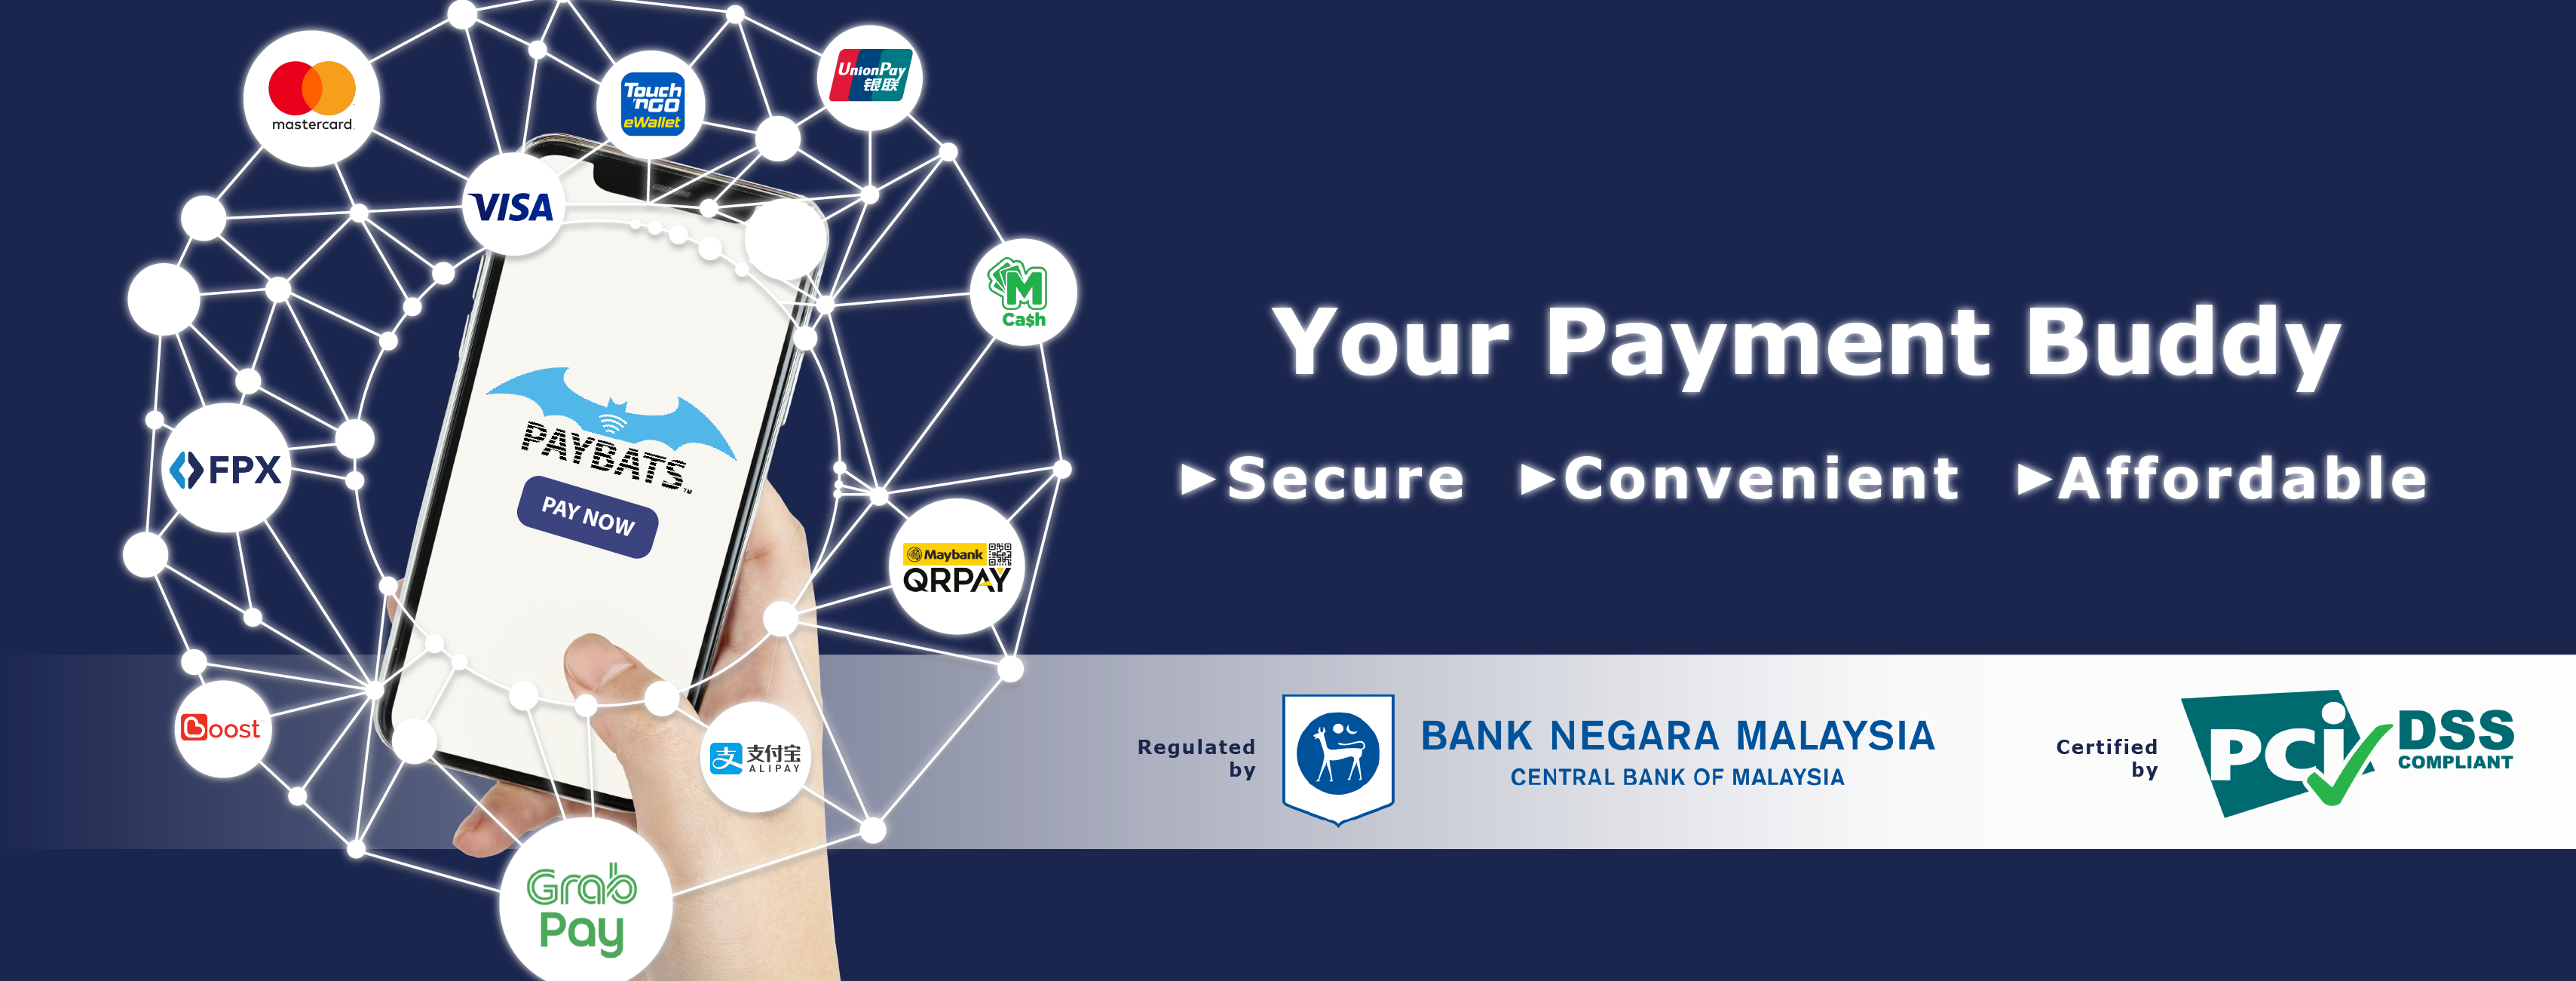 Paybats Your Payment Gateway Buddy